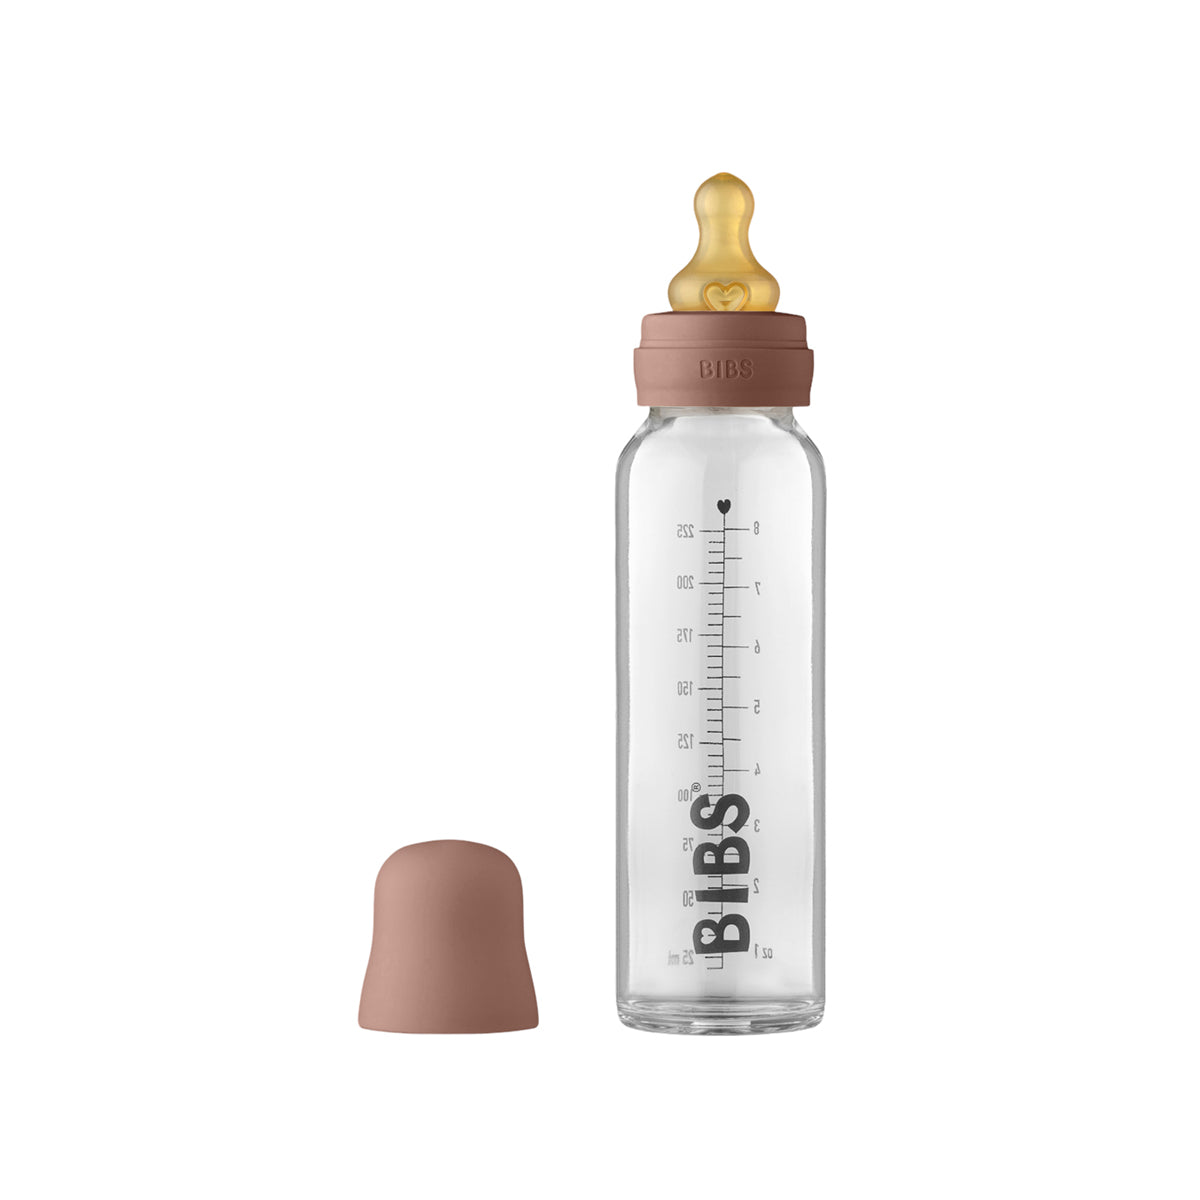 BIBS Baby Glass Bottle - 225ml - Woodchuck